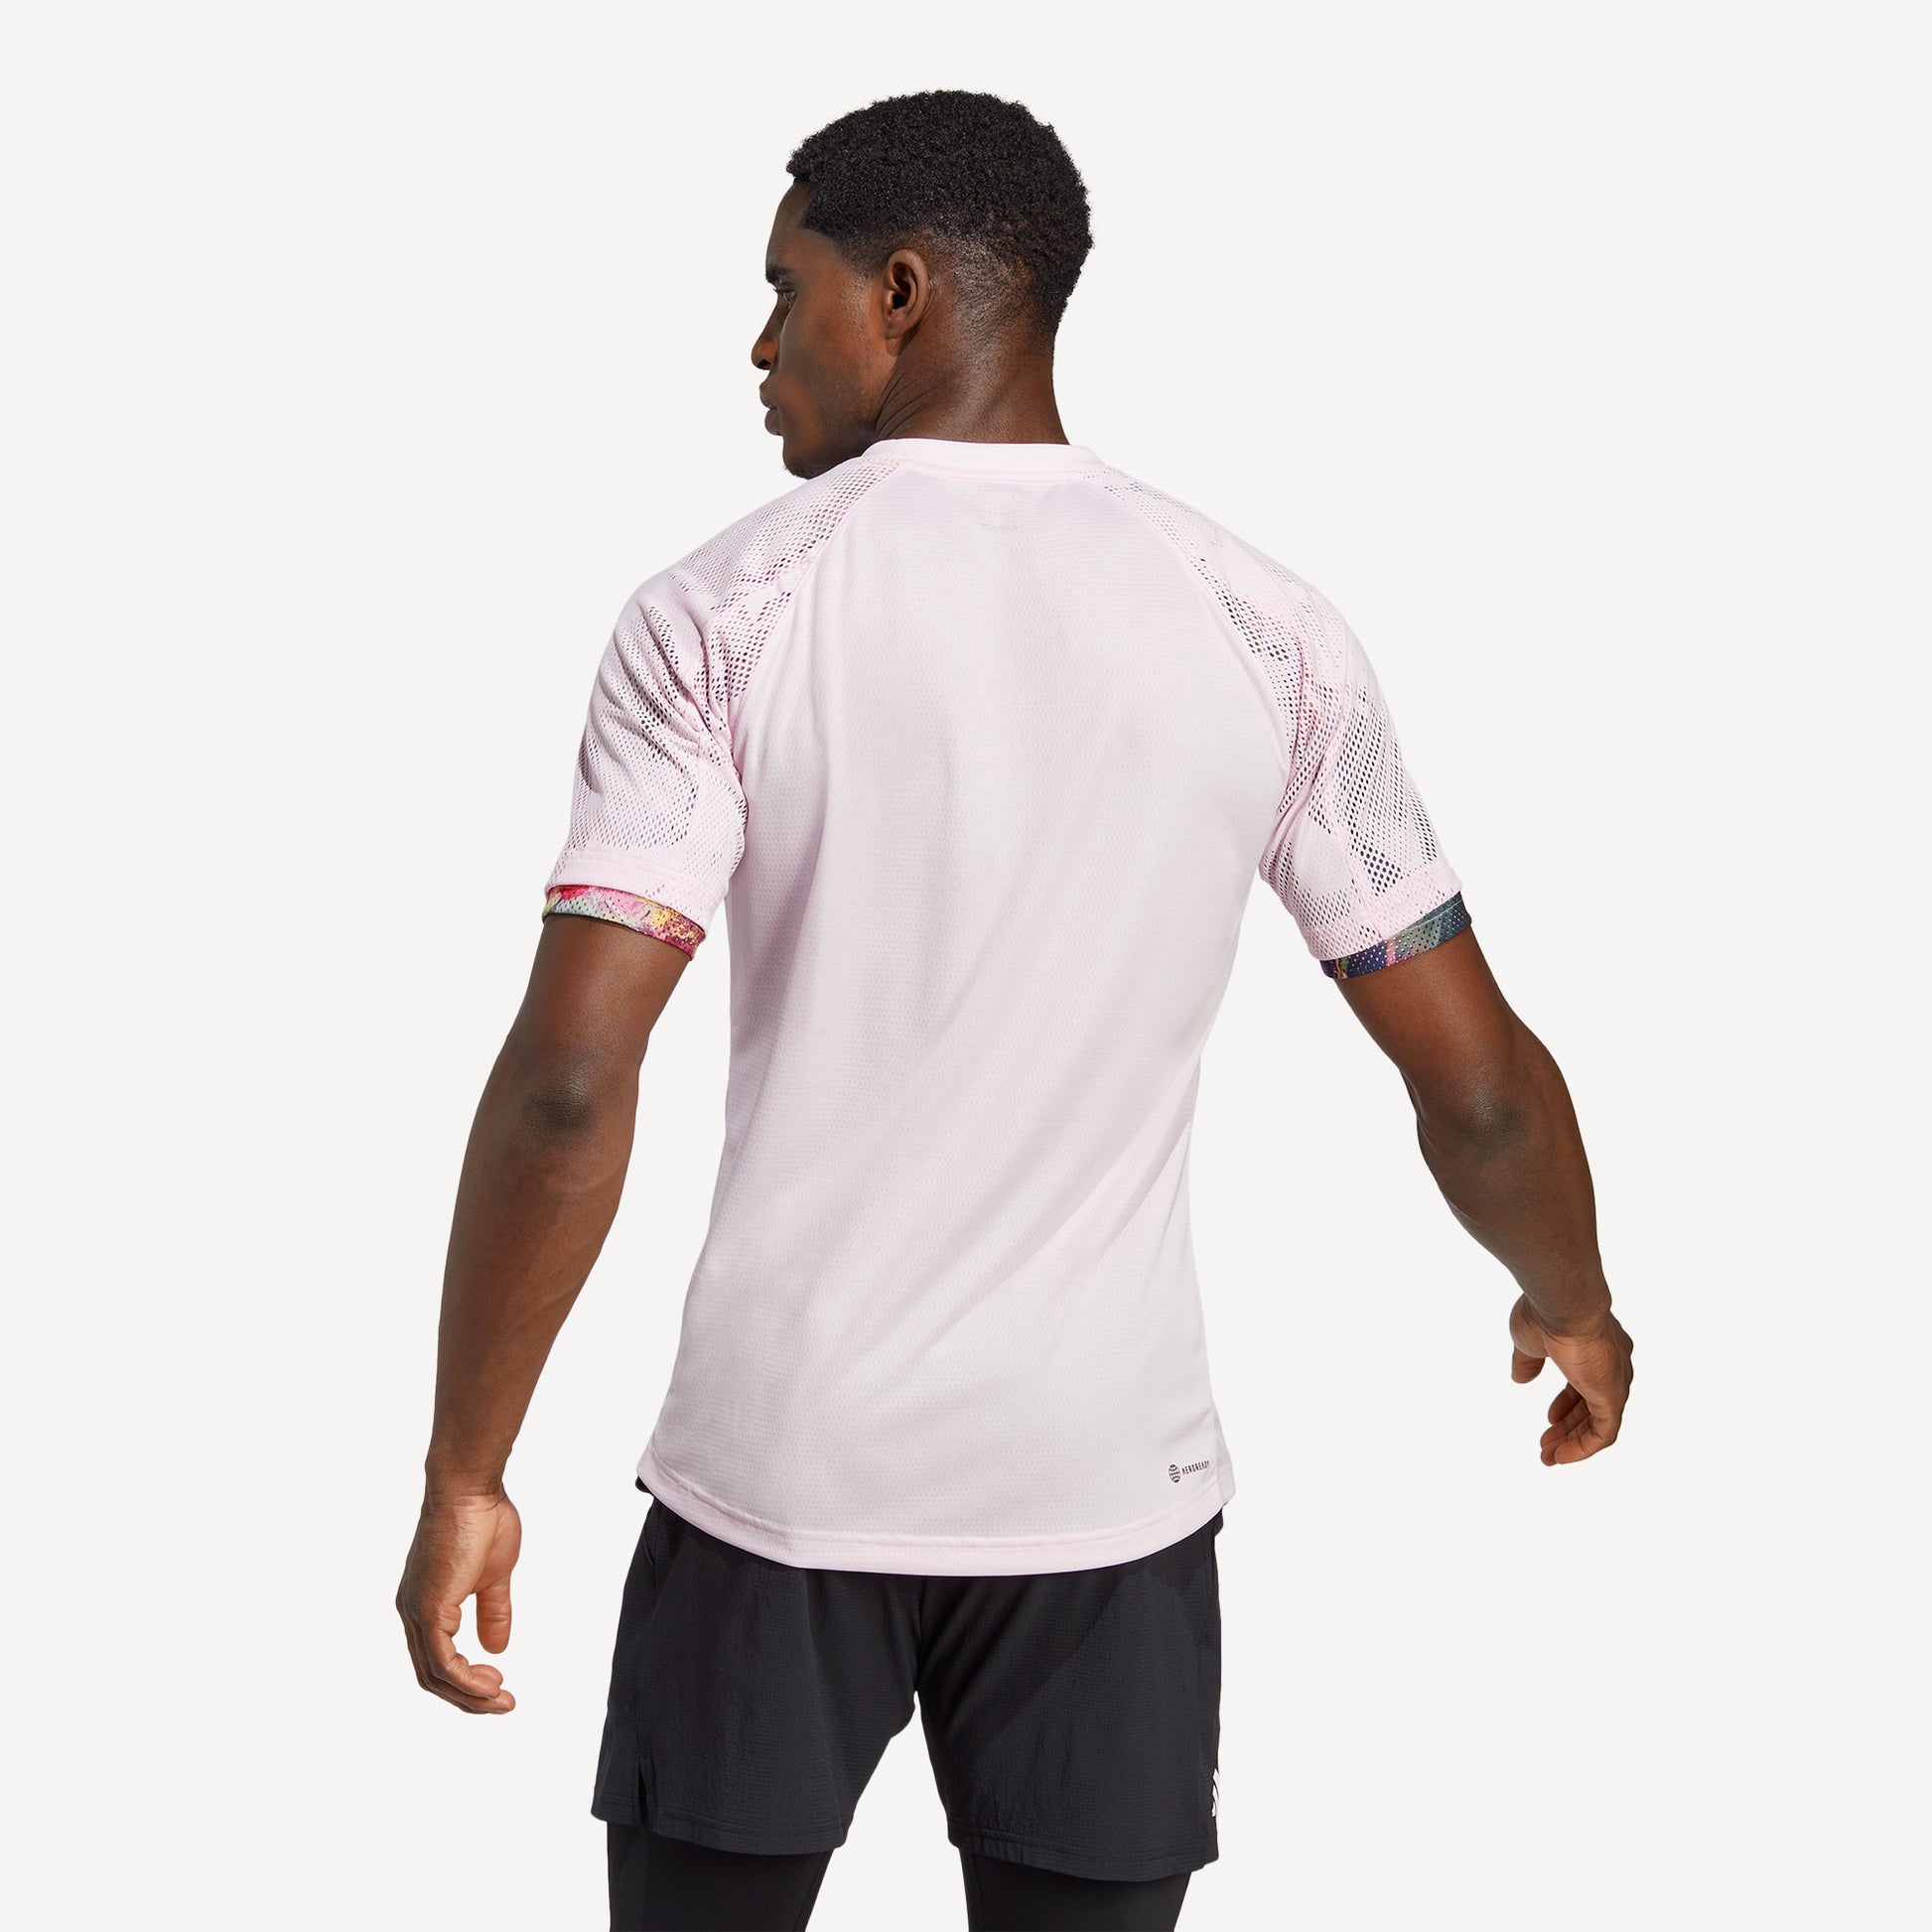 adidas Melbourne Ergo Heat Ready Men's Tennis Shirt Pink (2)